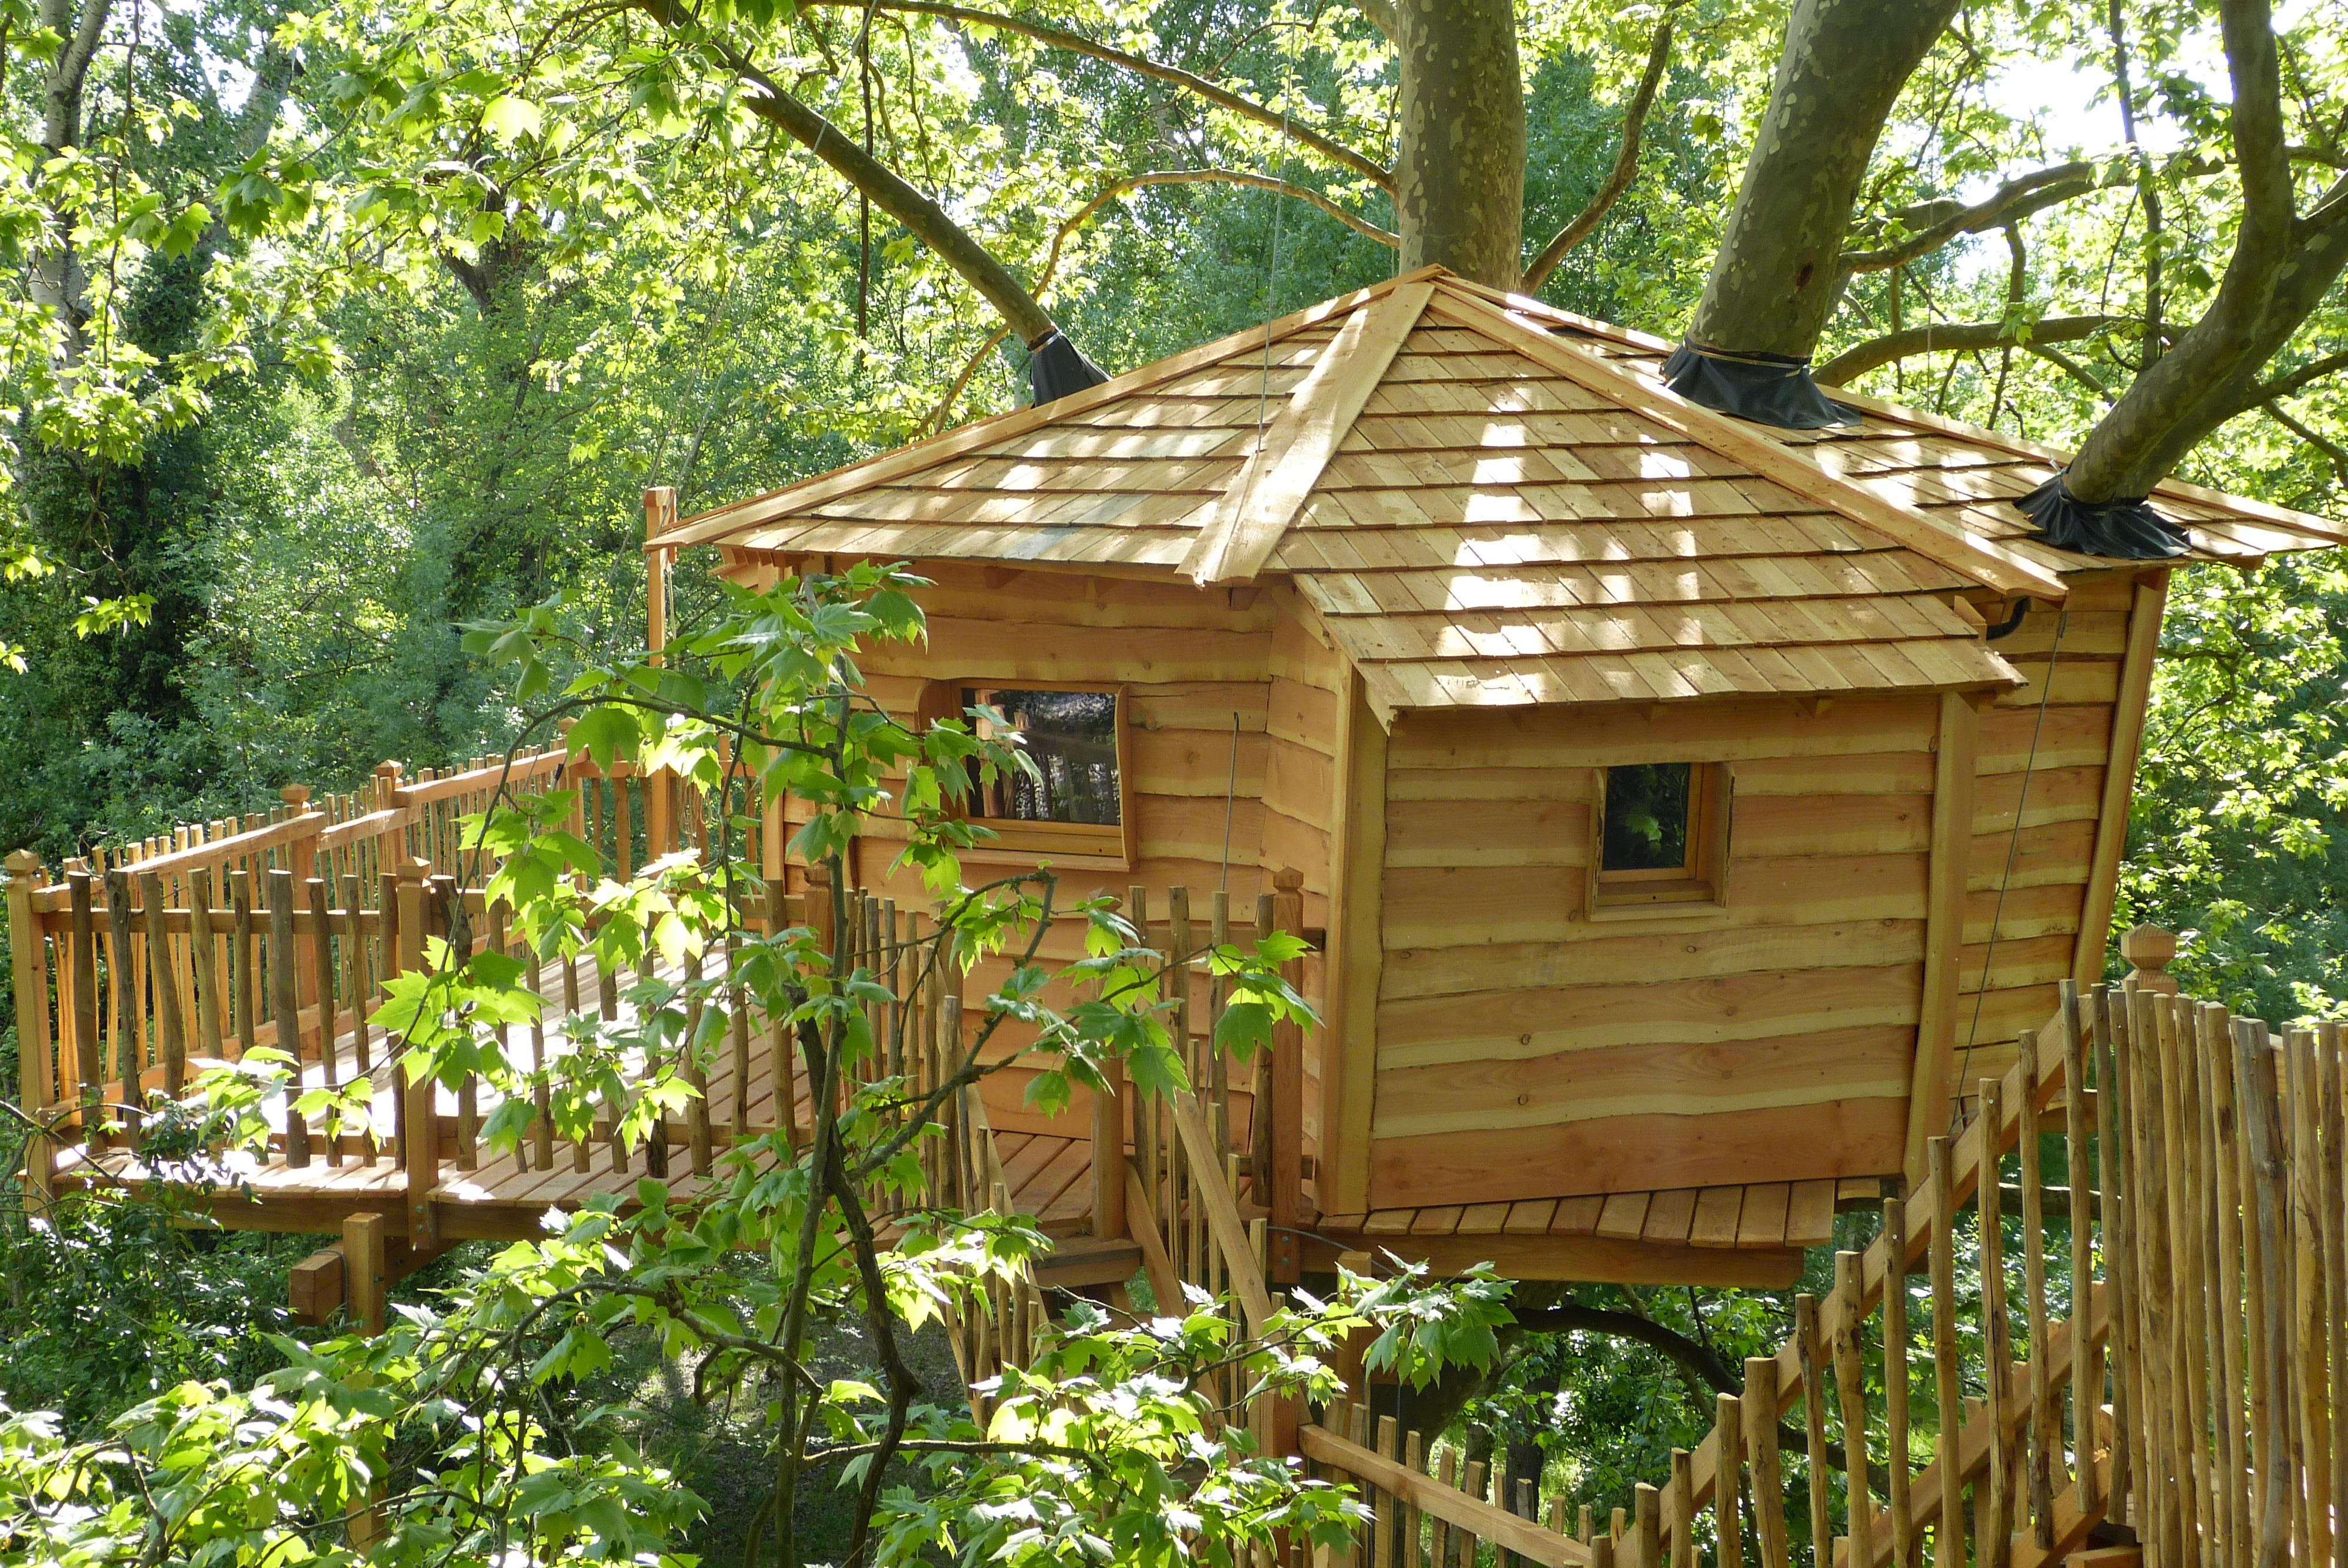 Accommodation - Treehouse - Camping Universal